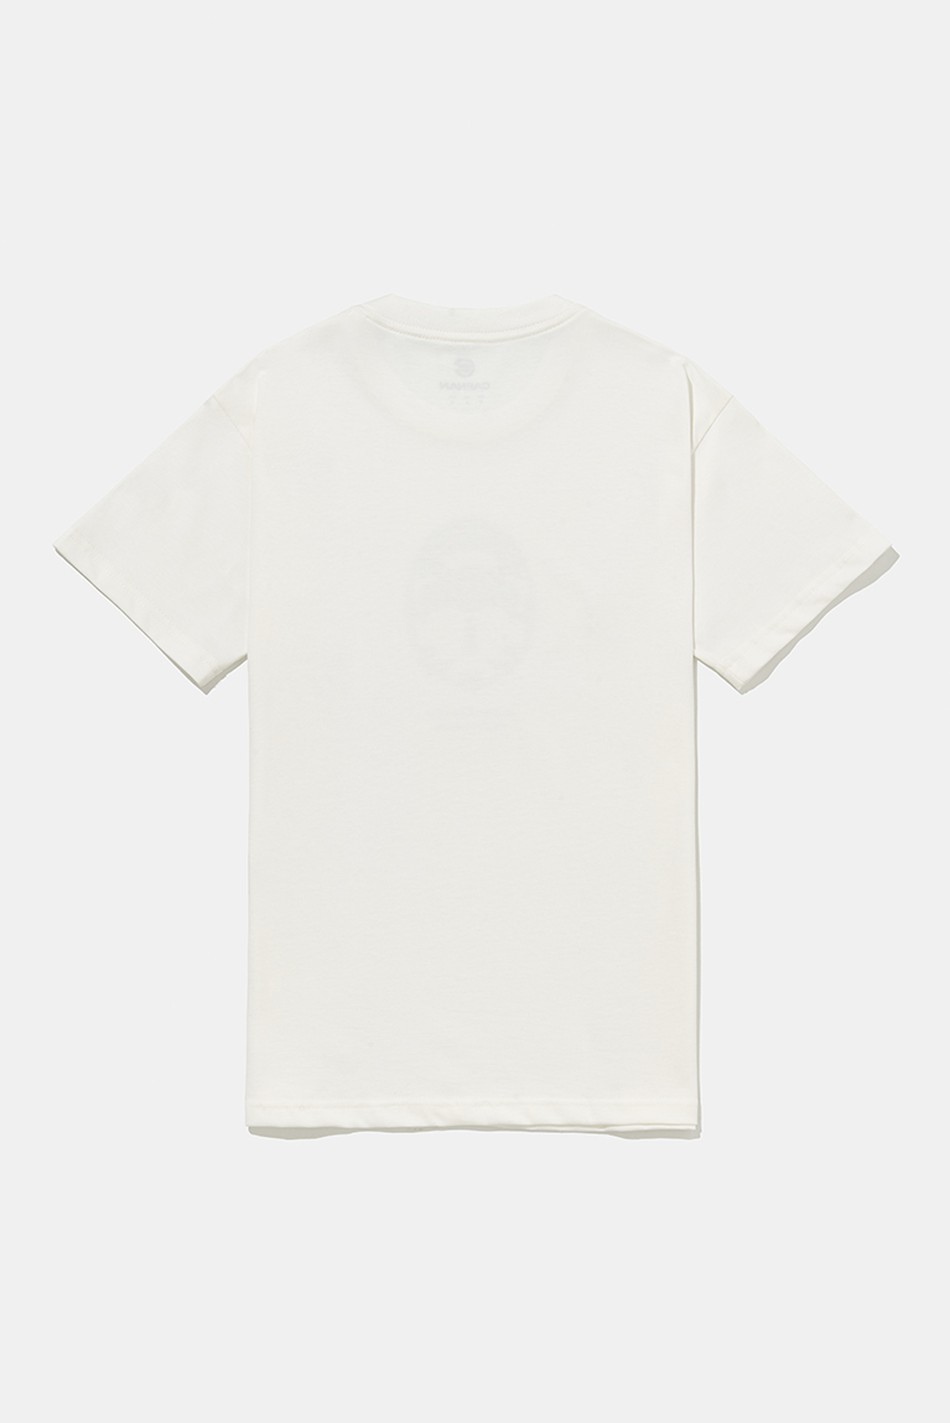 T-Shirt Ring Off-White